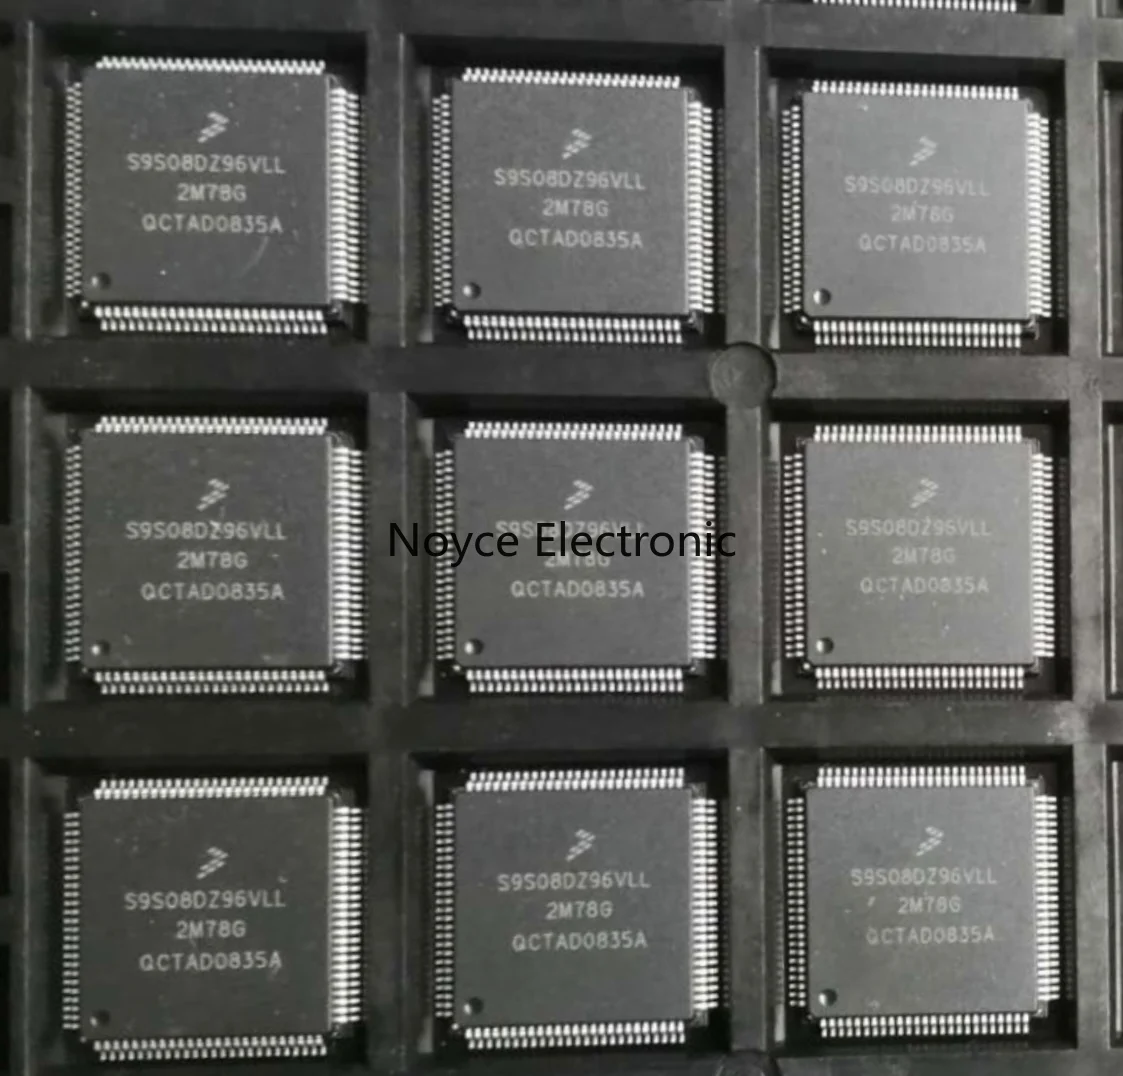 1pcs/S9S08DZ96 new original genuine spot S9S08DZ96VLL TQFP100 microcontroller chip xc3s500e xc3s500e 4vqg100c xc3s500e vqg100 tqfp100